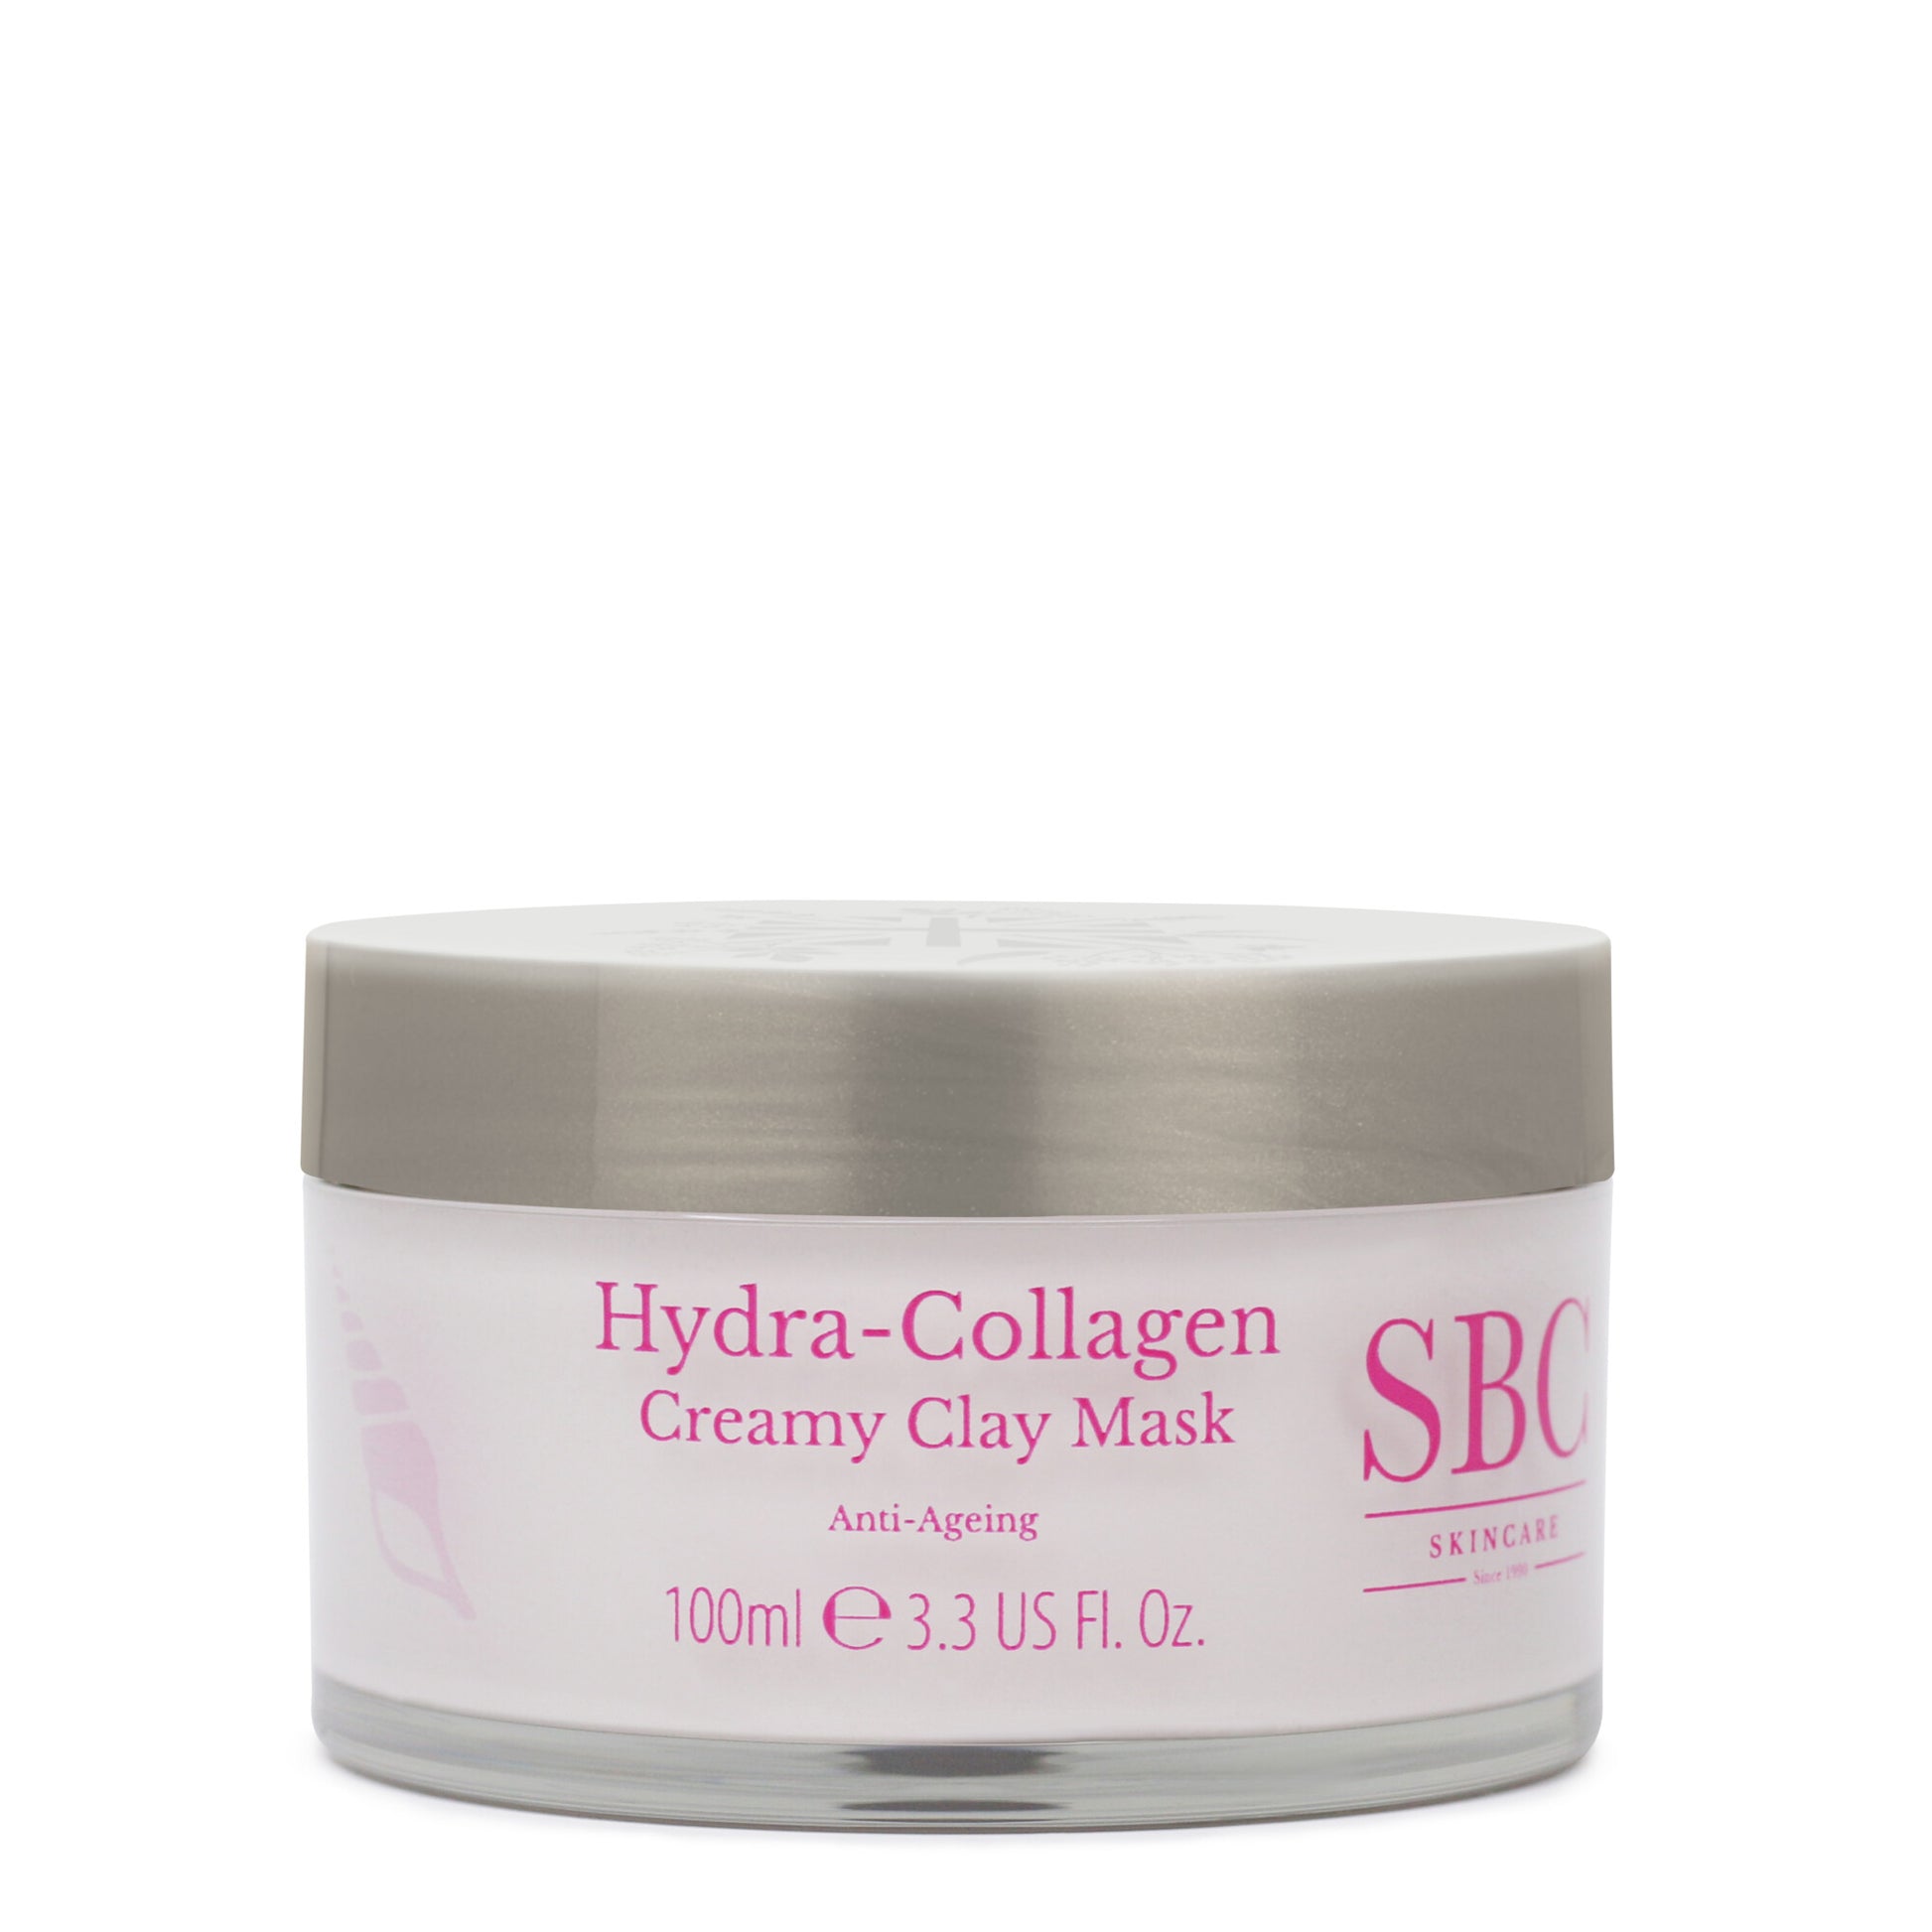 100ml Hydra-Collagen Creamy Clay Mask on a white background 